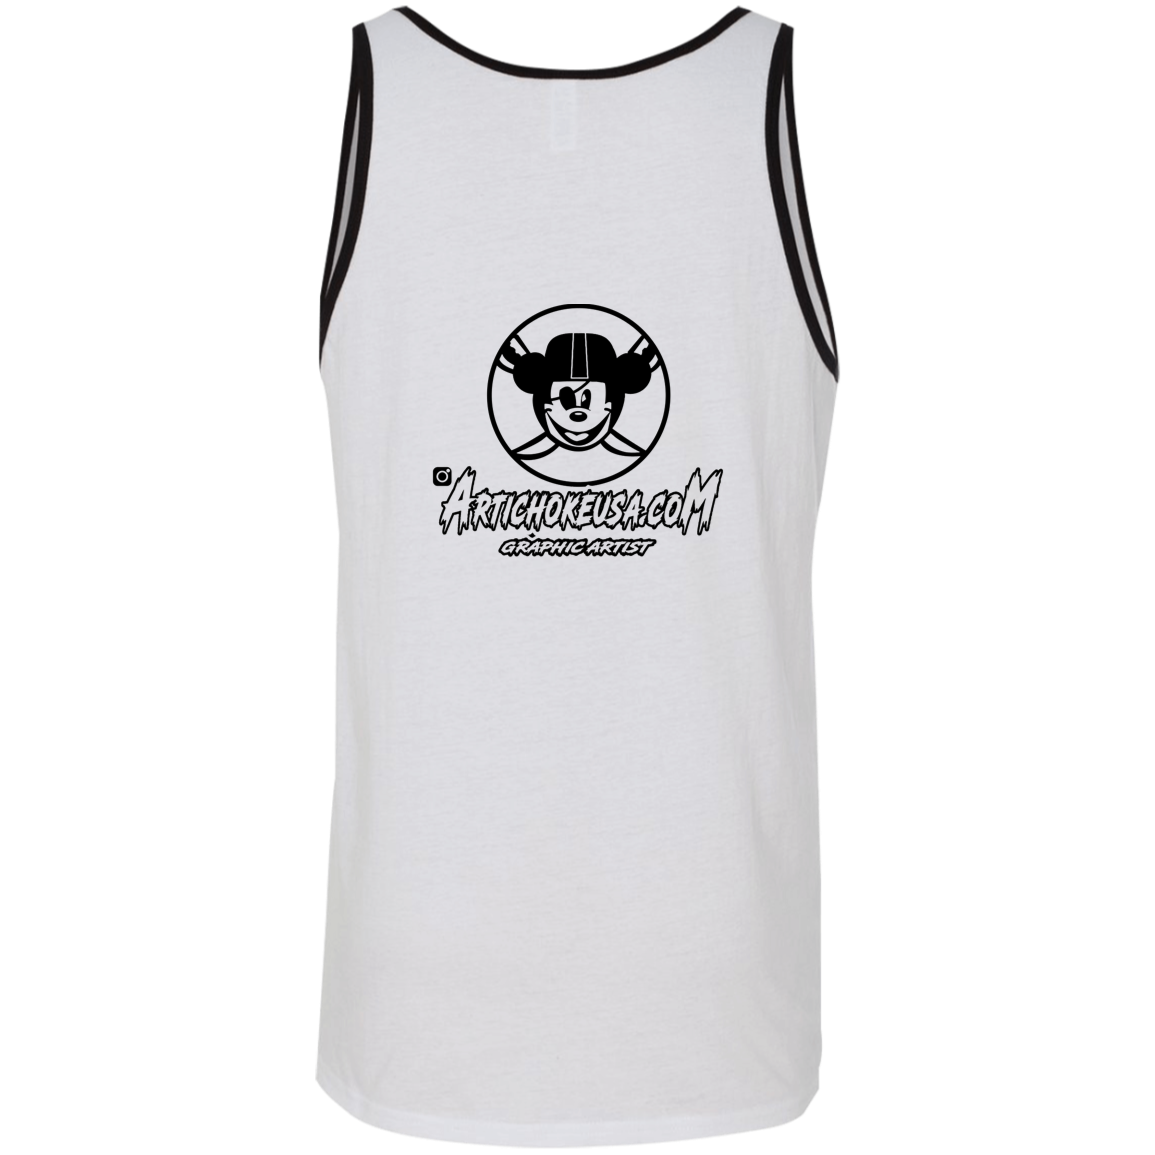 ArtichokeUSA Custom Design. Las Vegas Raiders & Mickey Mouse Mash Up. Fan Art. Parody. Unisex Tank